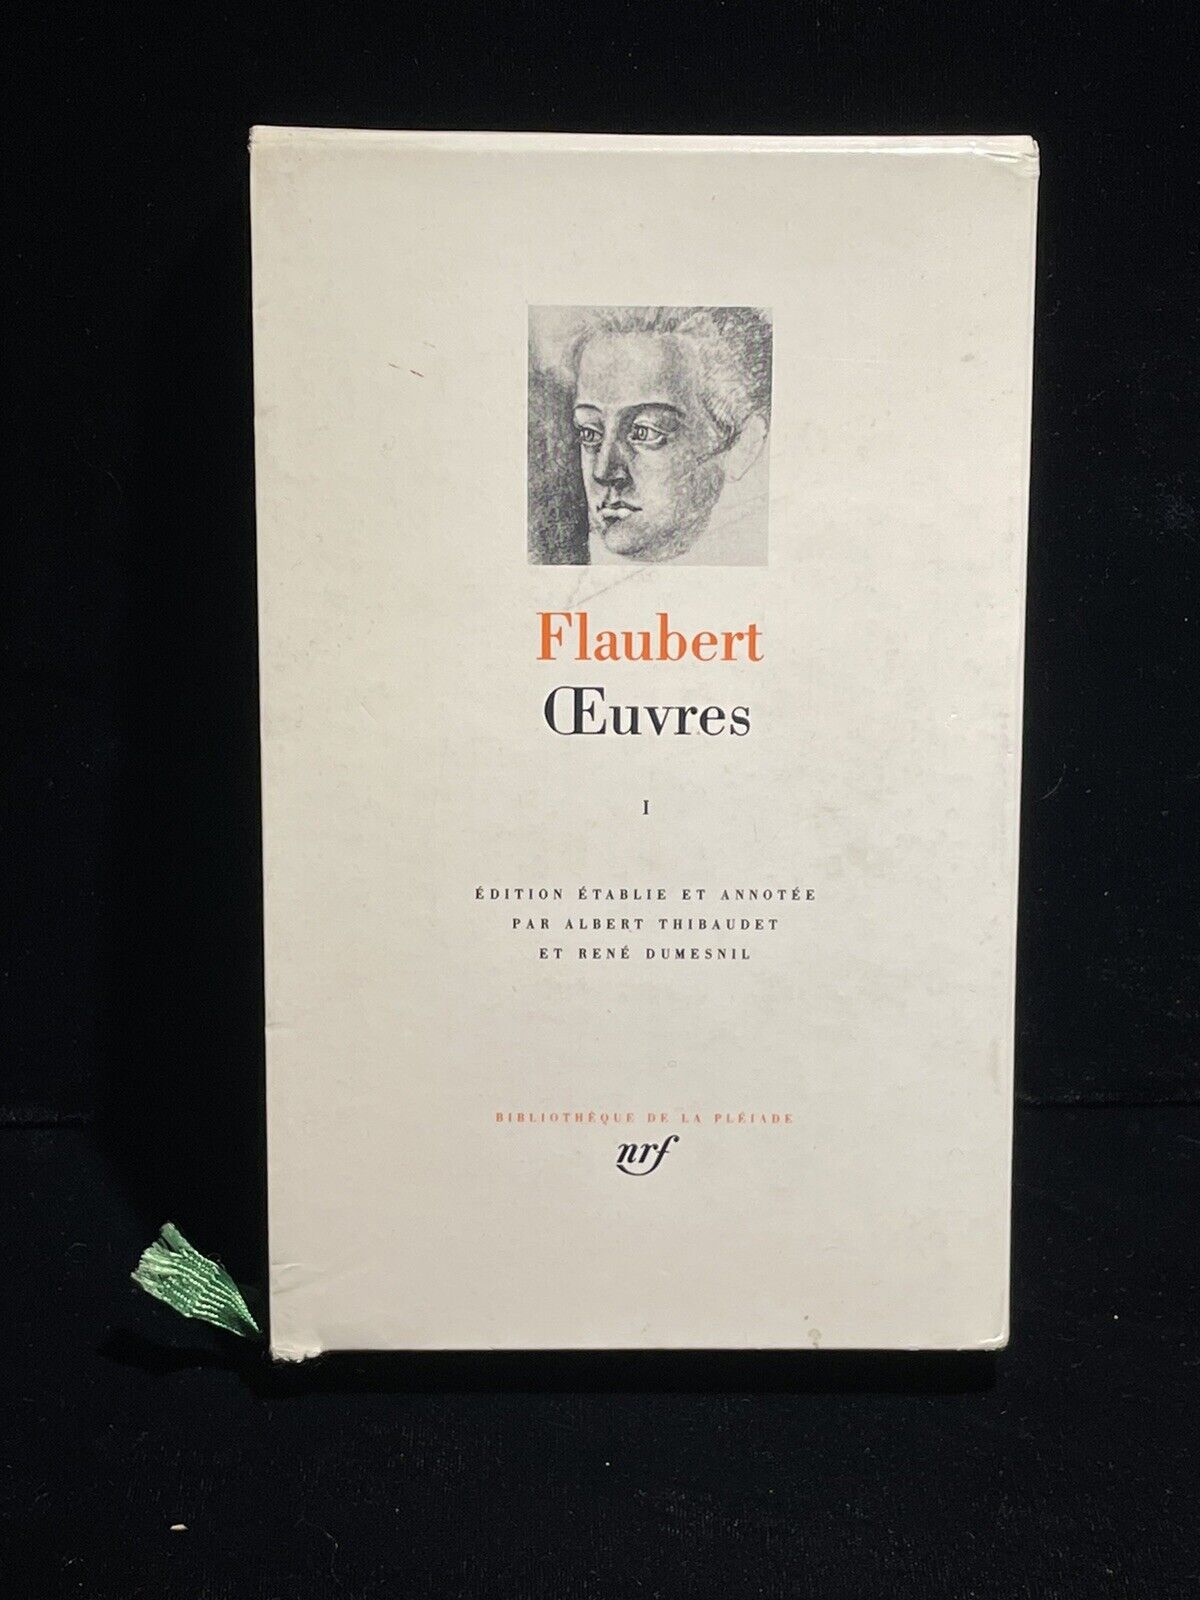 Flaubert Oeuvres 1 Etablie et Annotee Par Albert Thibaudet et Rene Dumesnil 1951